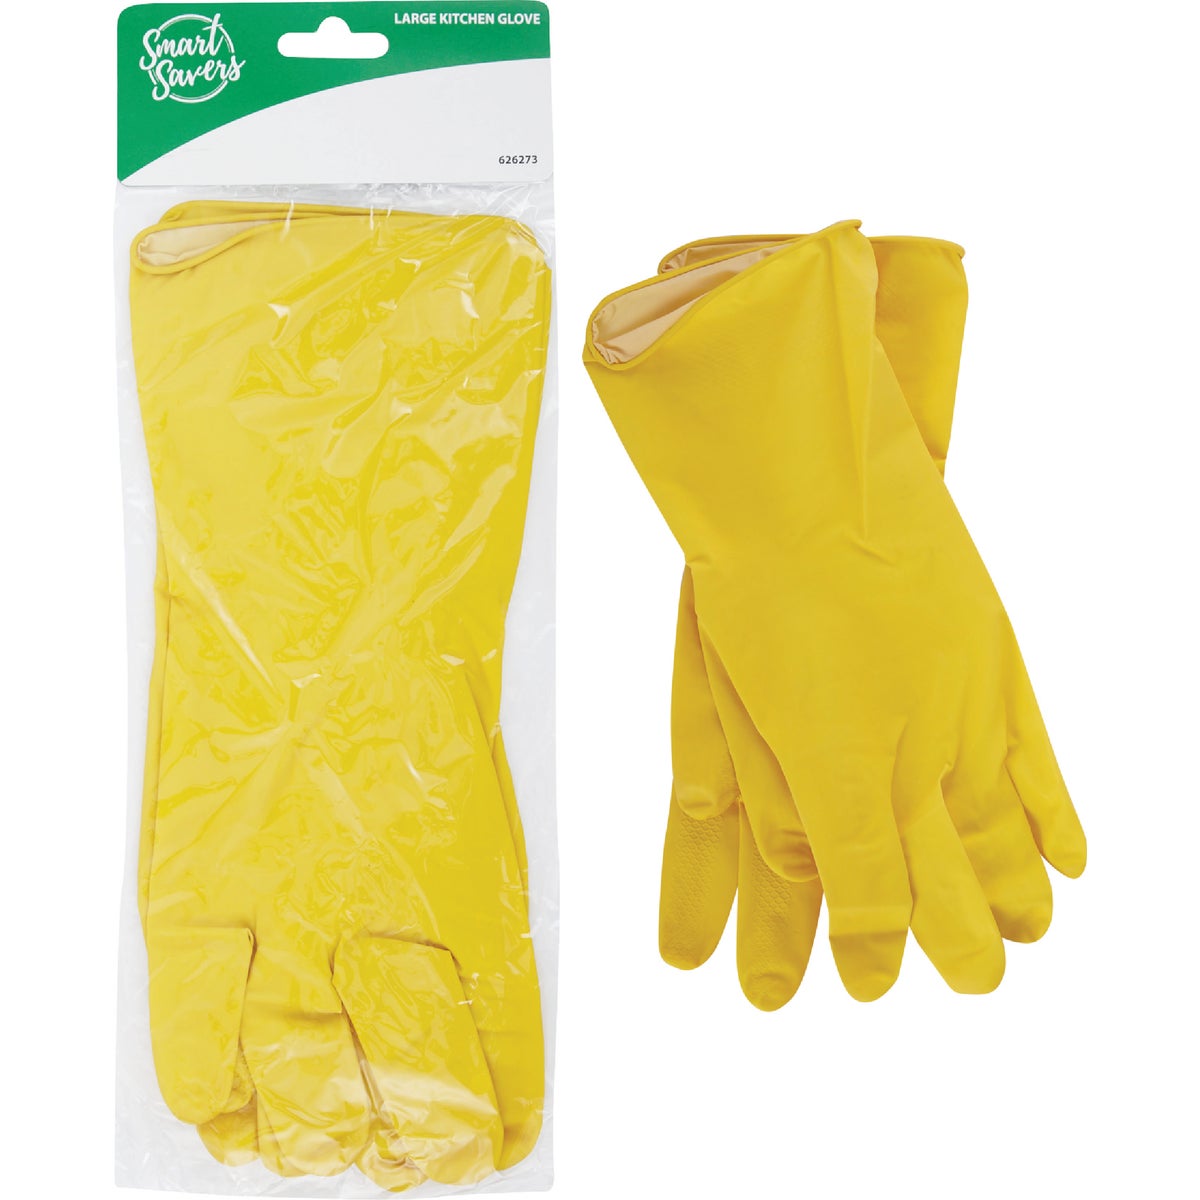 Smart Savers Large Kitchen Rubber Glove